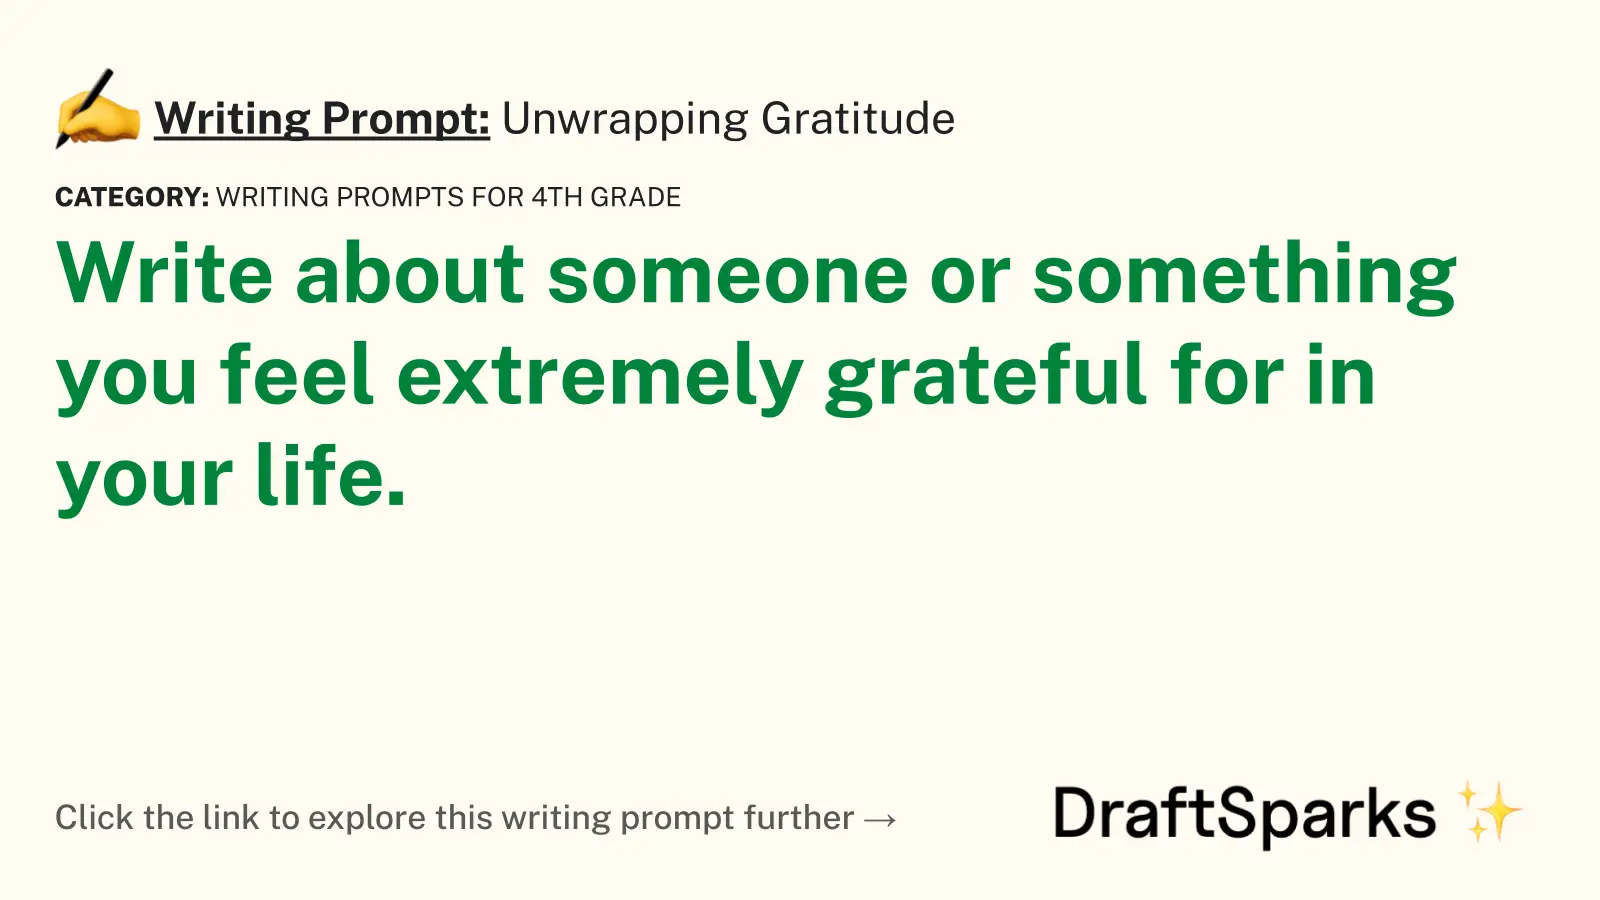 Unwrapping Gratitude